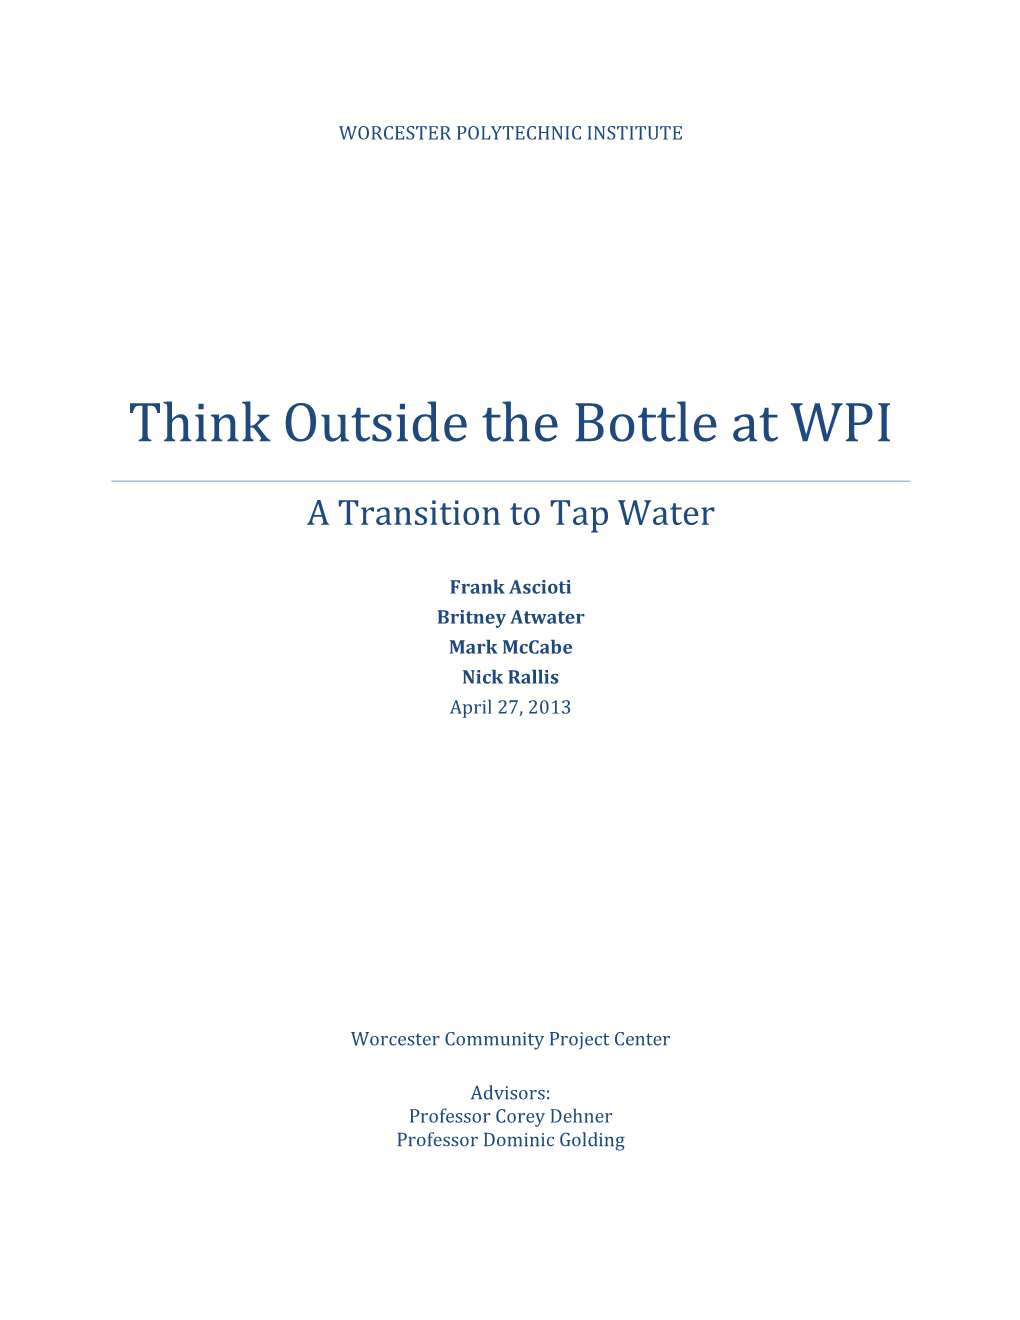 Think Outside the Bottle at WPI